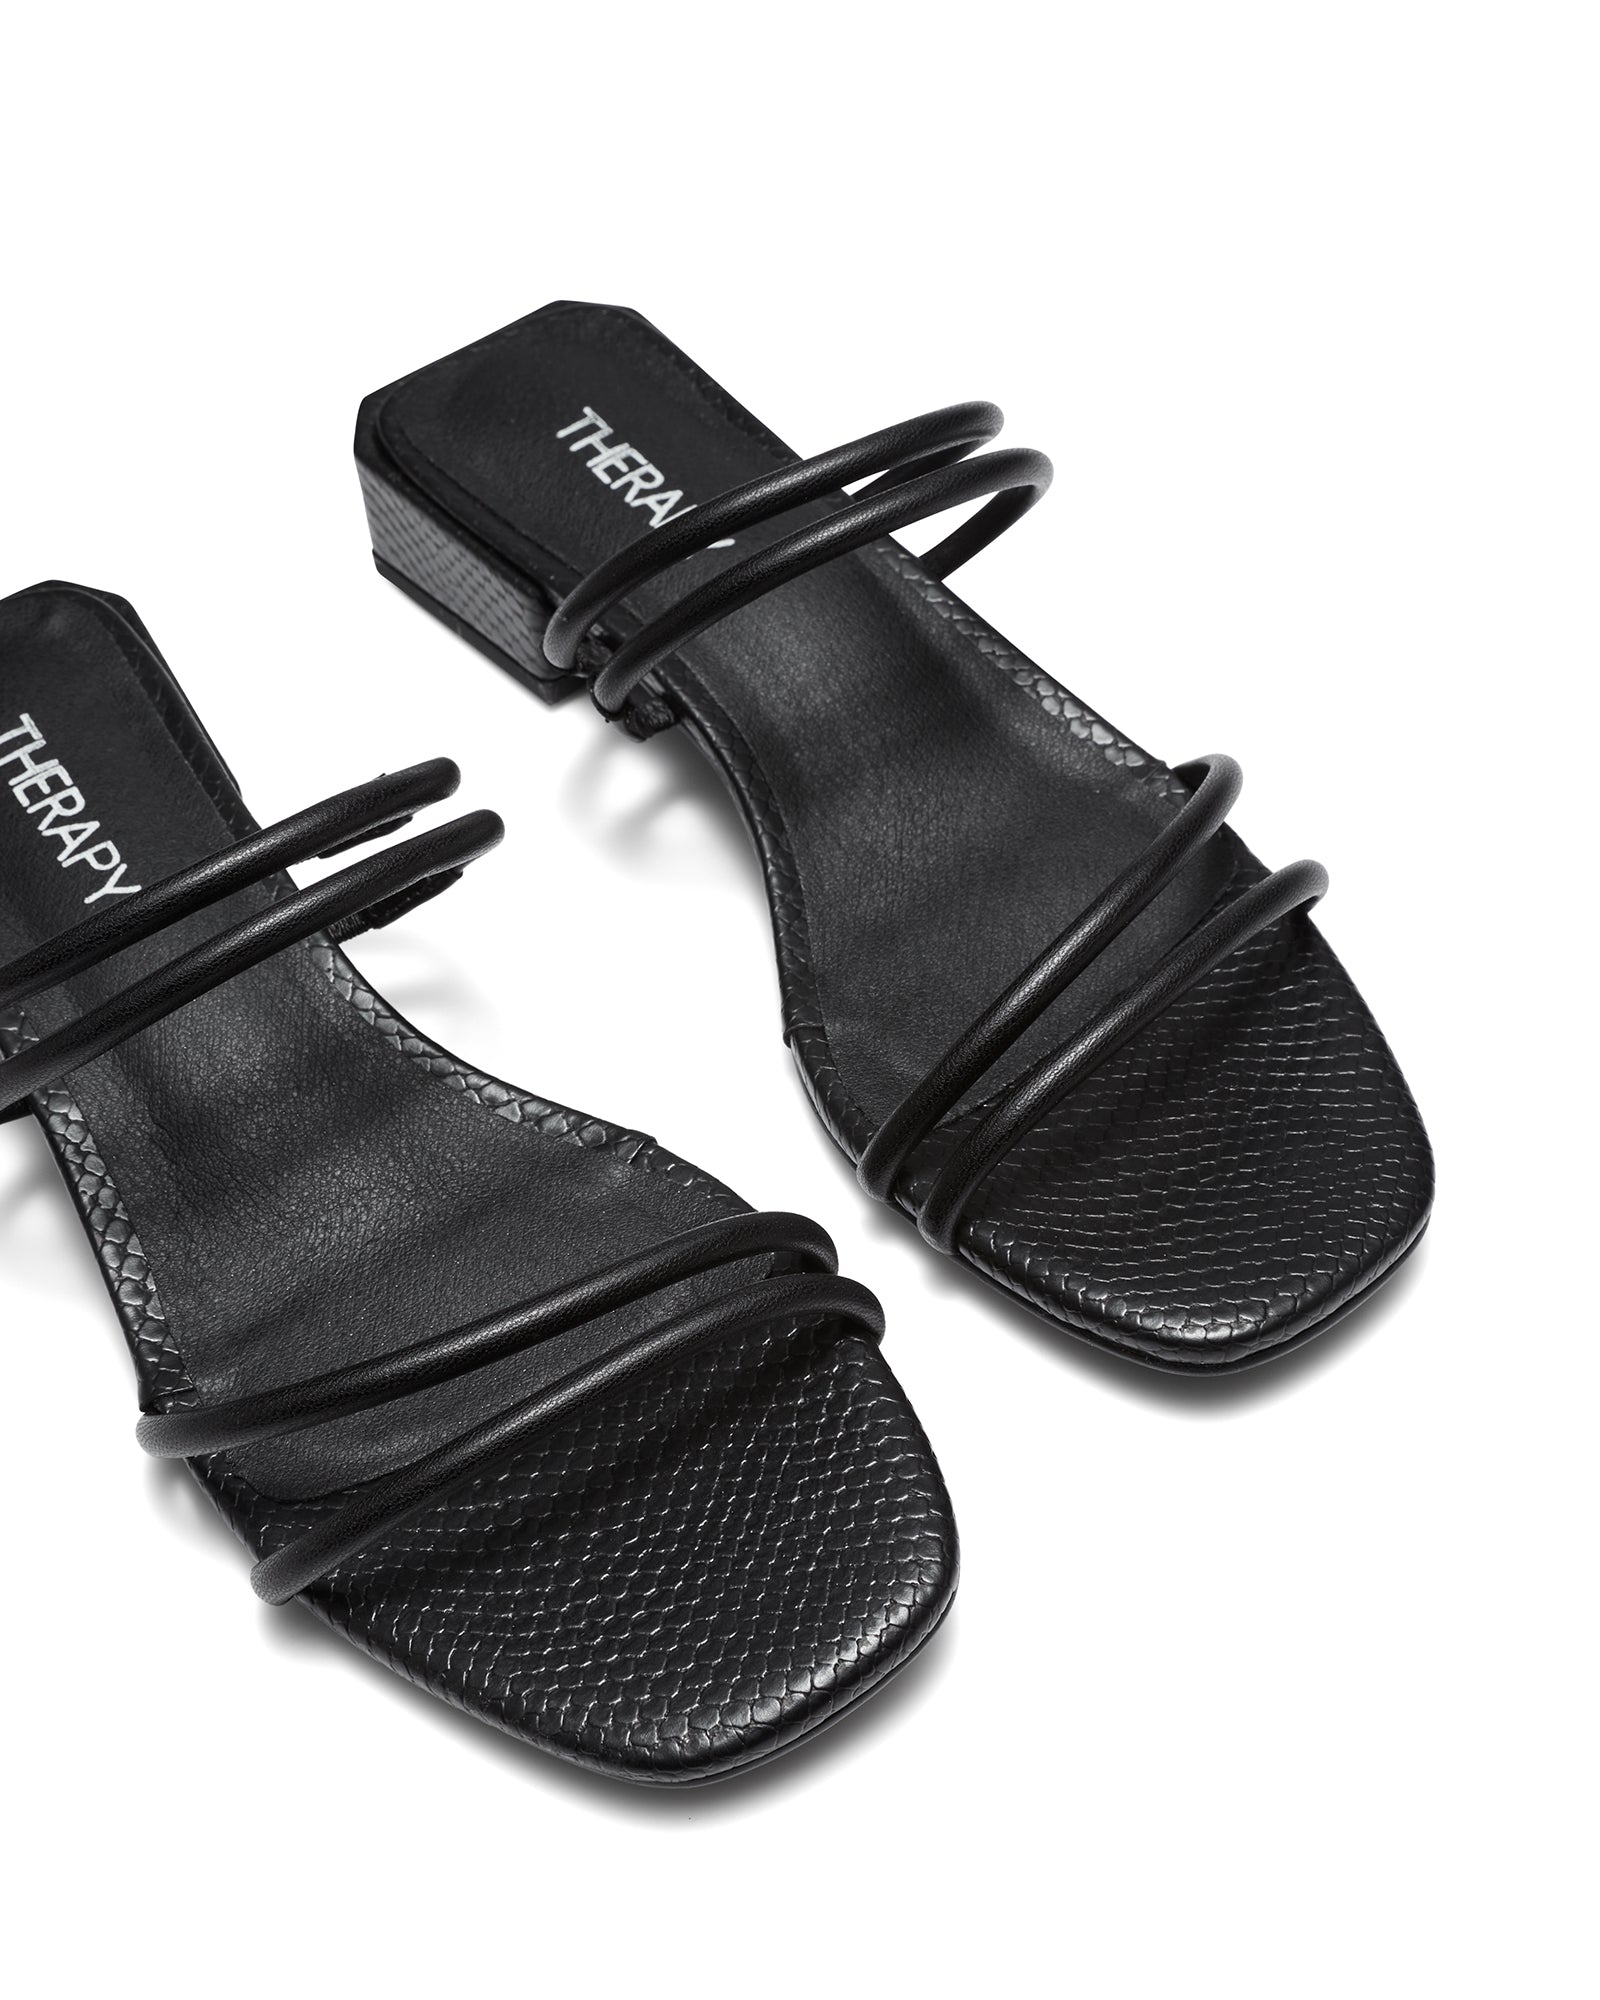 Therapy Shoes Elena Black | Women's Sandals | Flats | Slide | Low Heel